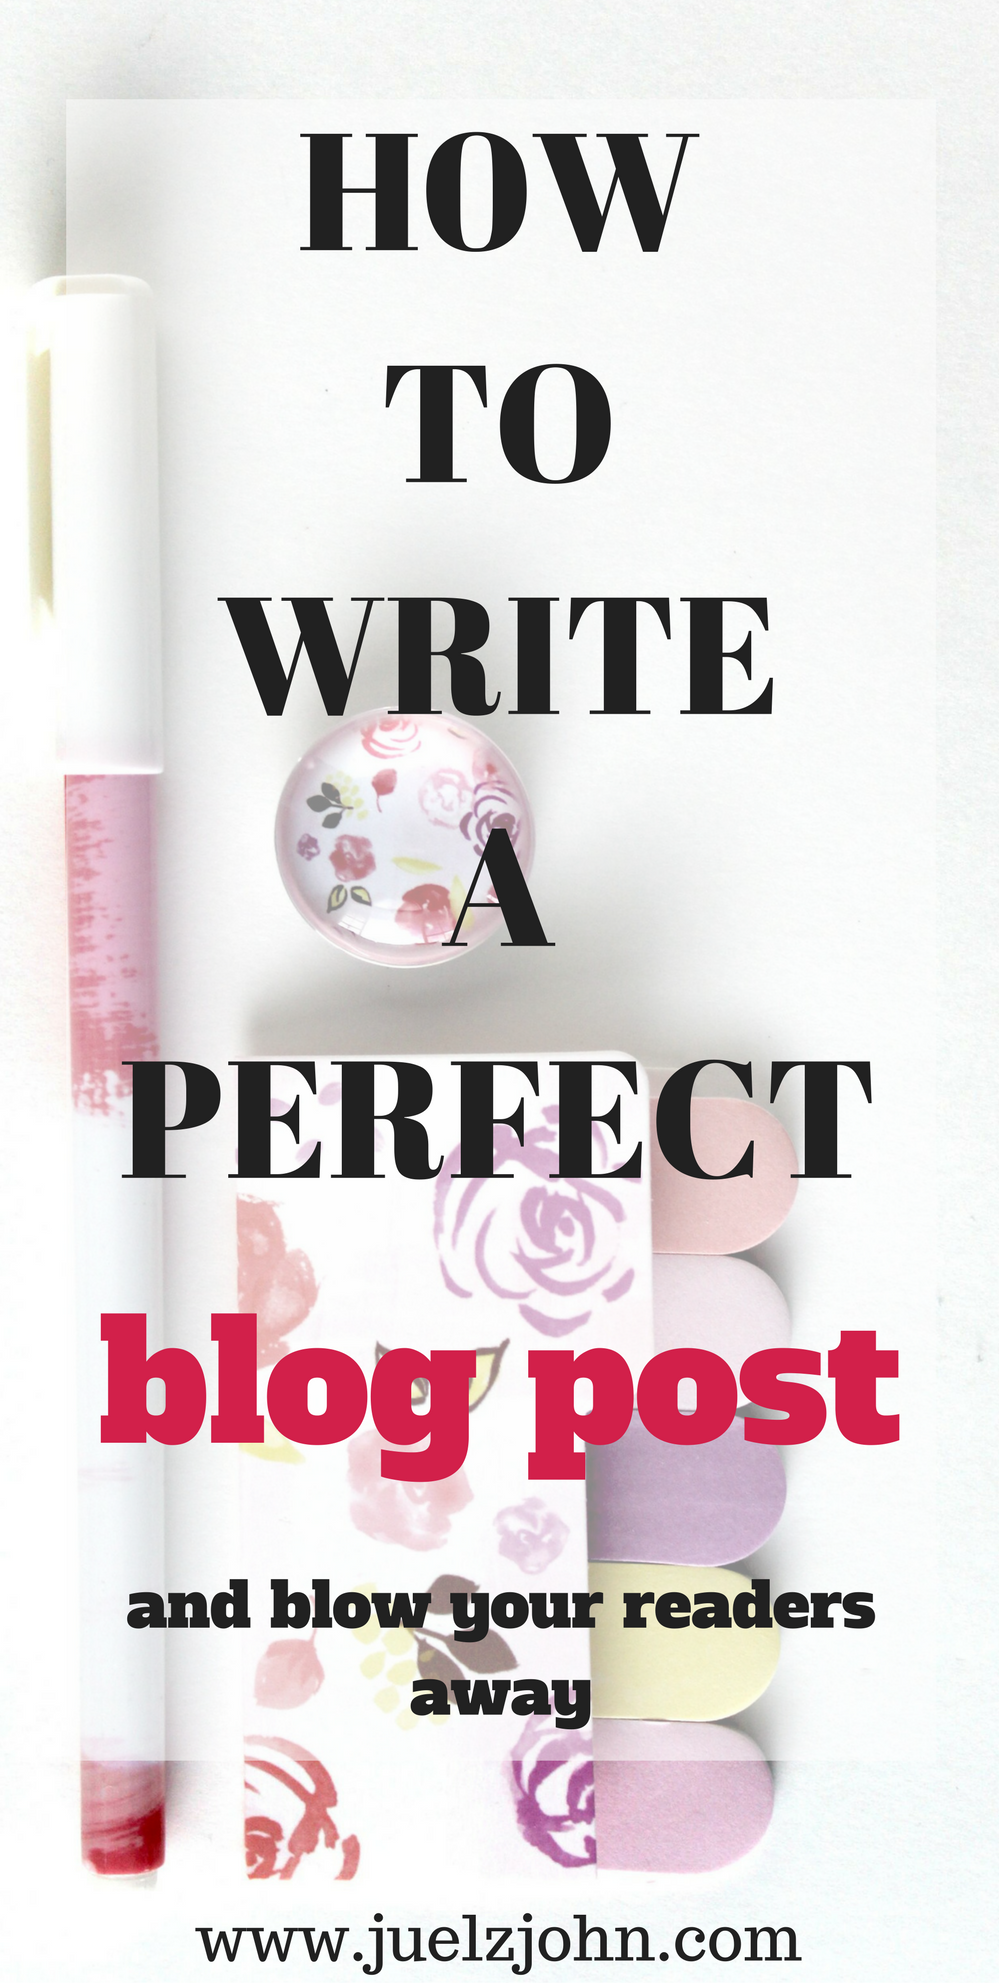 How to write a good blog post. www.juelzjohn.com